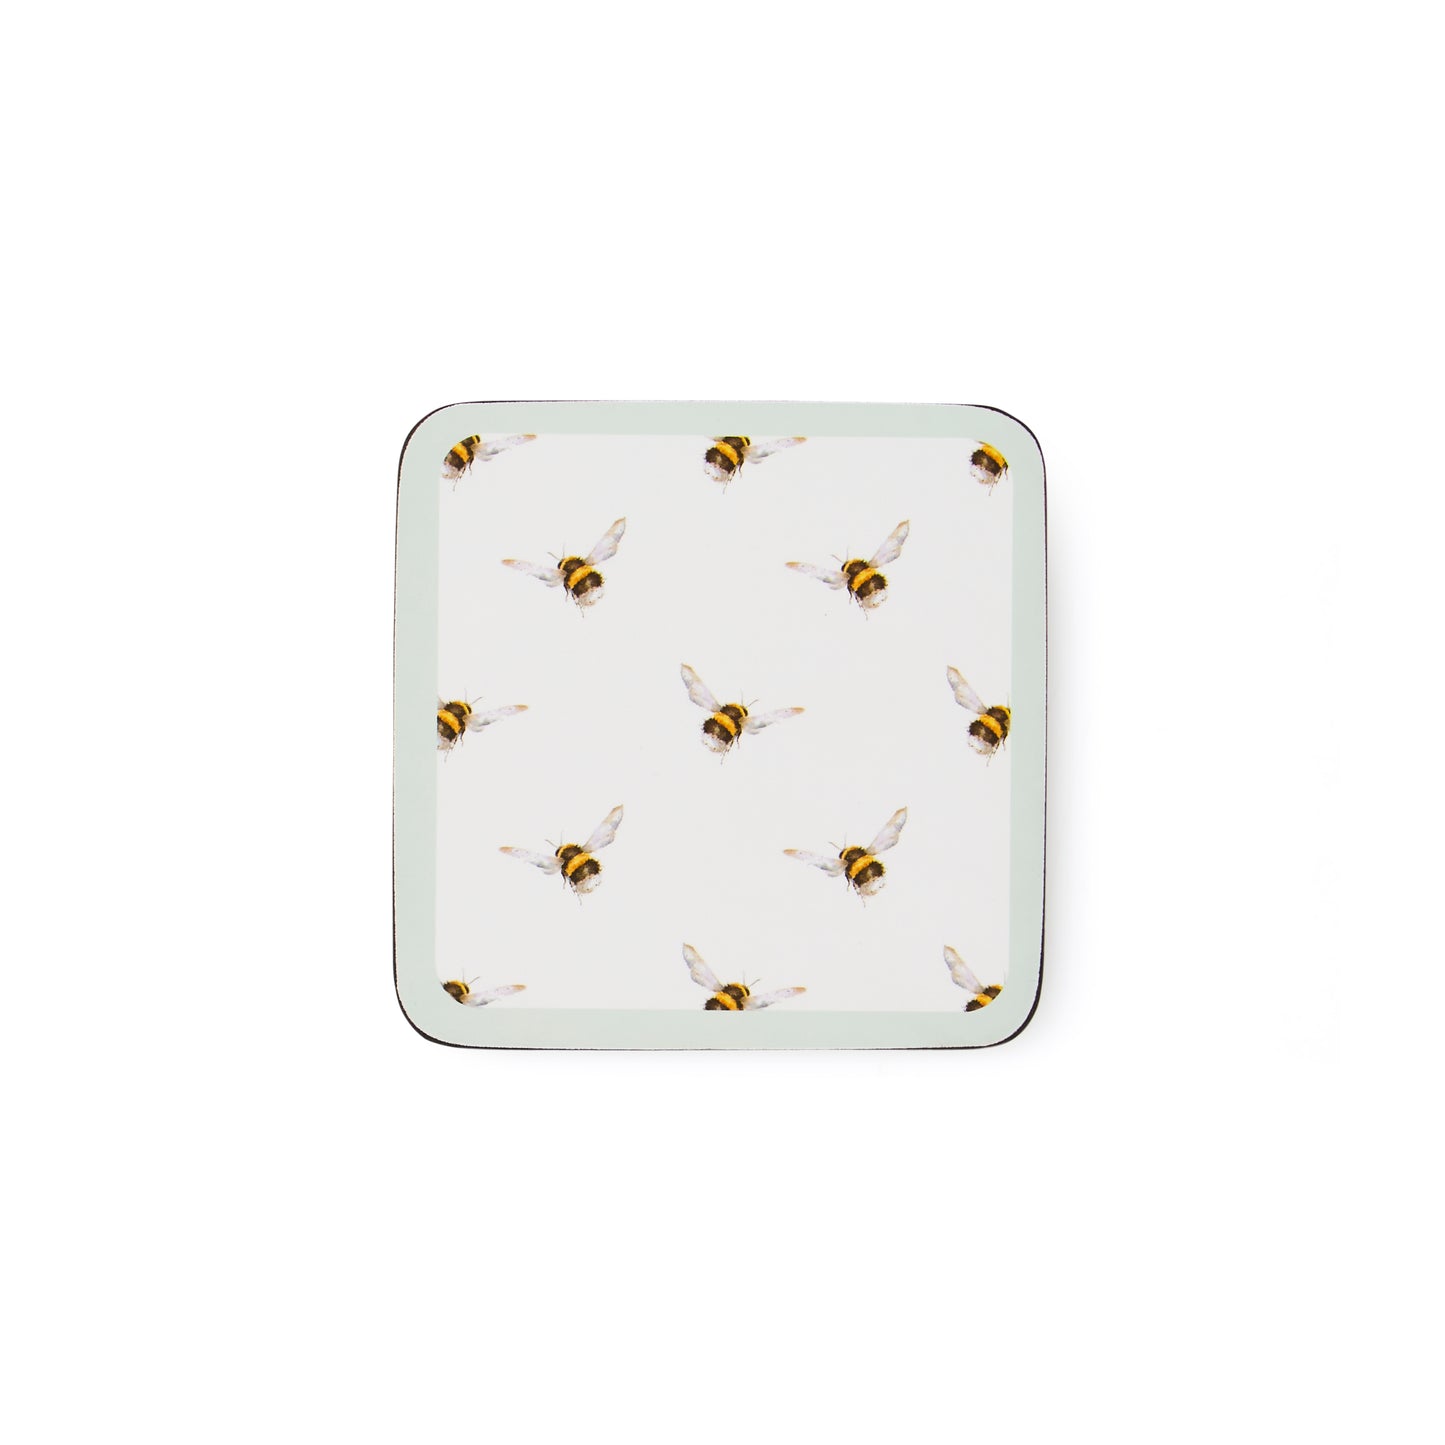 Royal Worcester Wrendale Designs Set of Bee Coasters